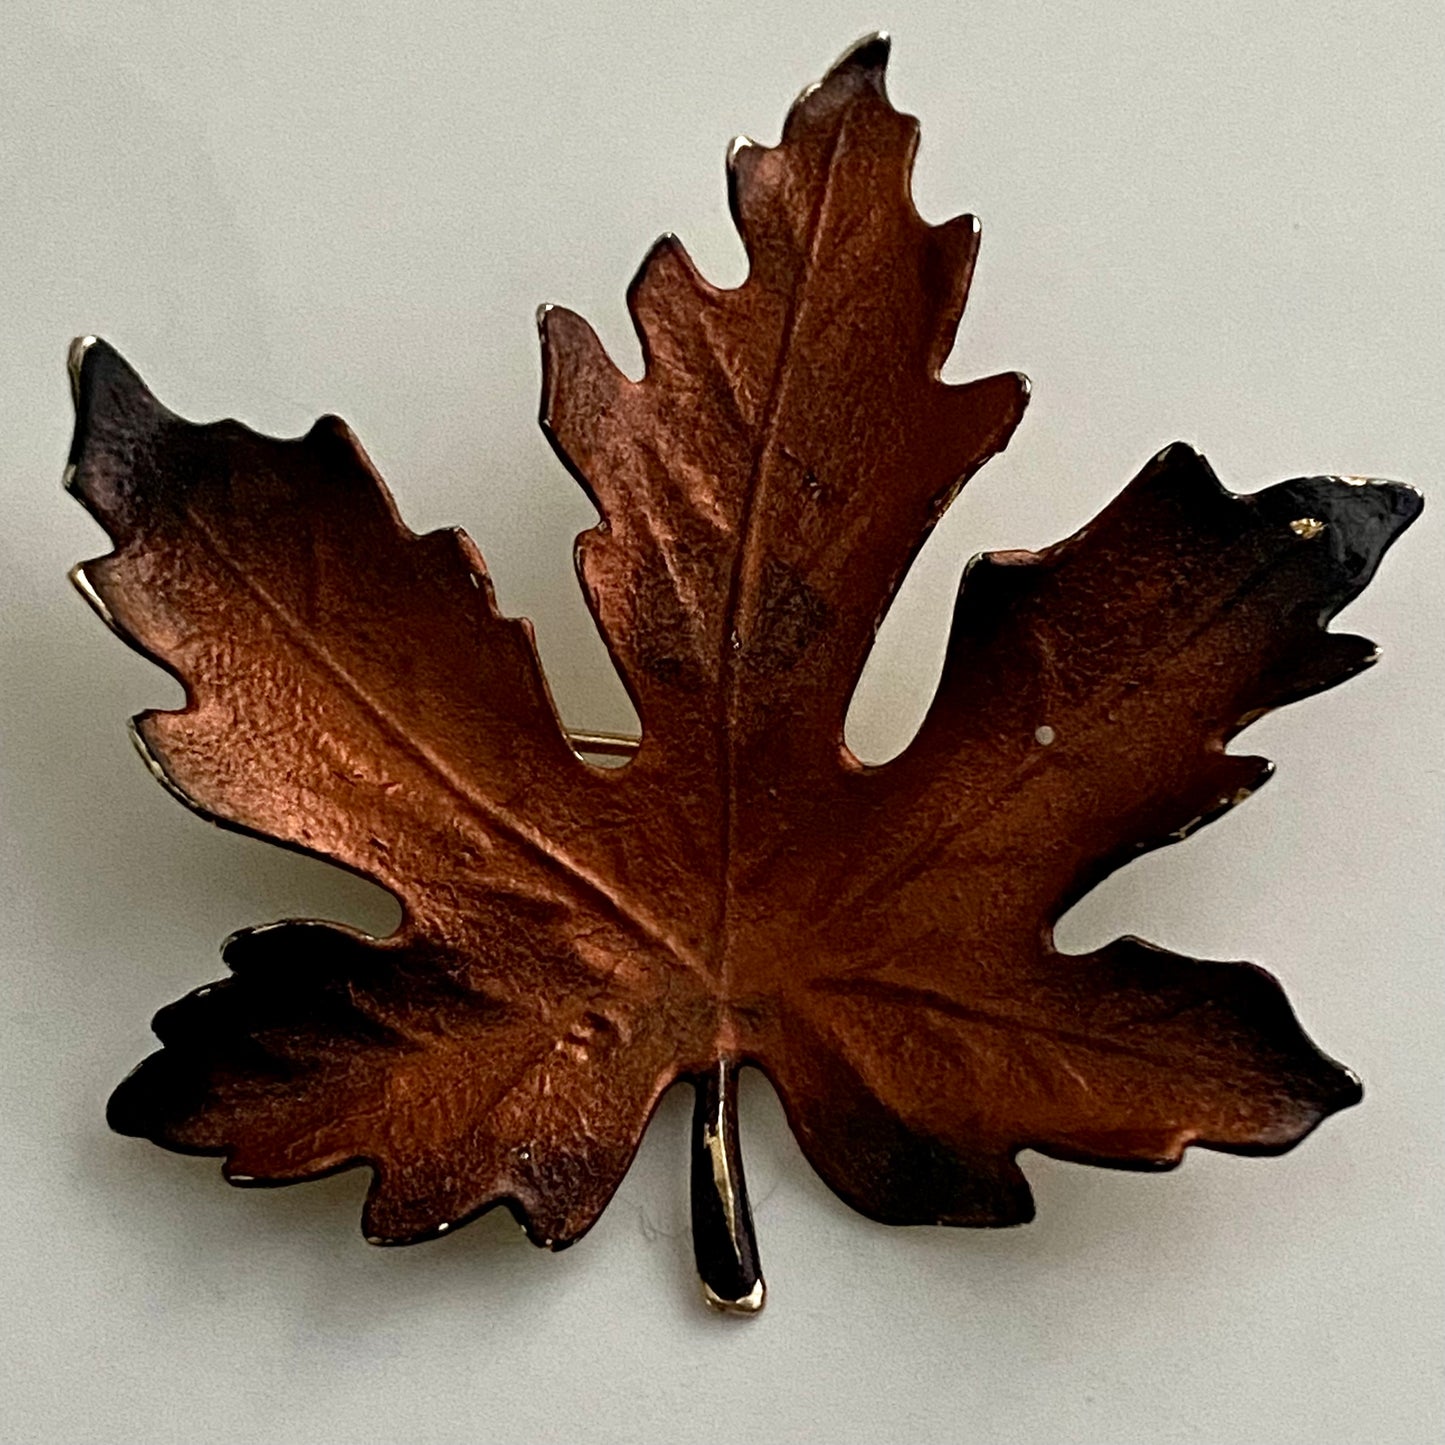 1980s Maple Leaf Brooch